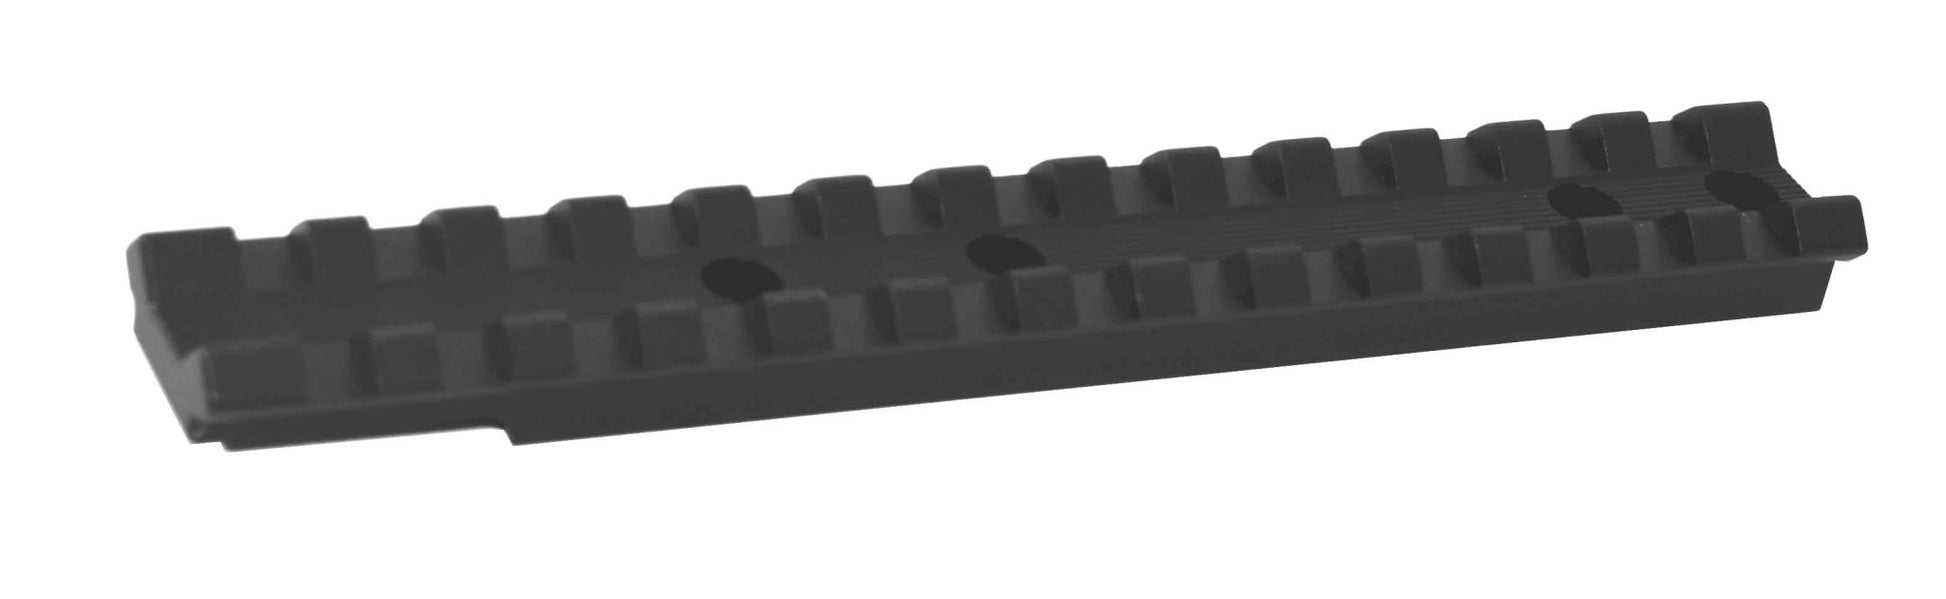 Stoeger M3000 picatinny rail mount adapter aluminum black. - TRINITY SUPPLY INC